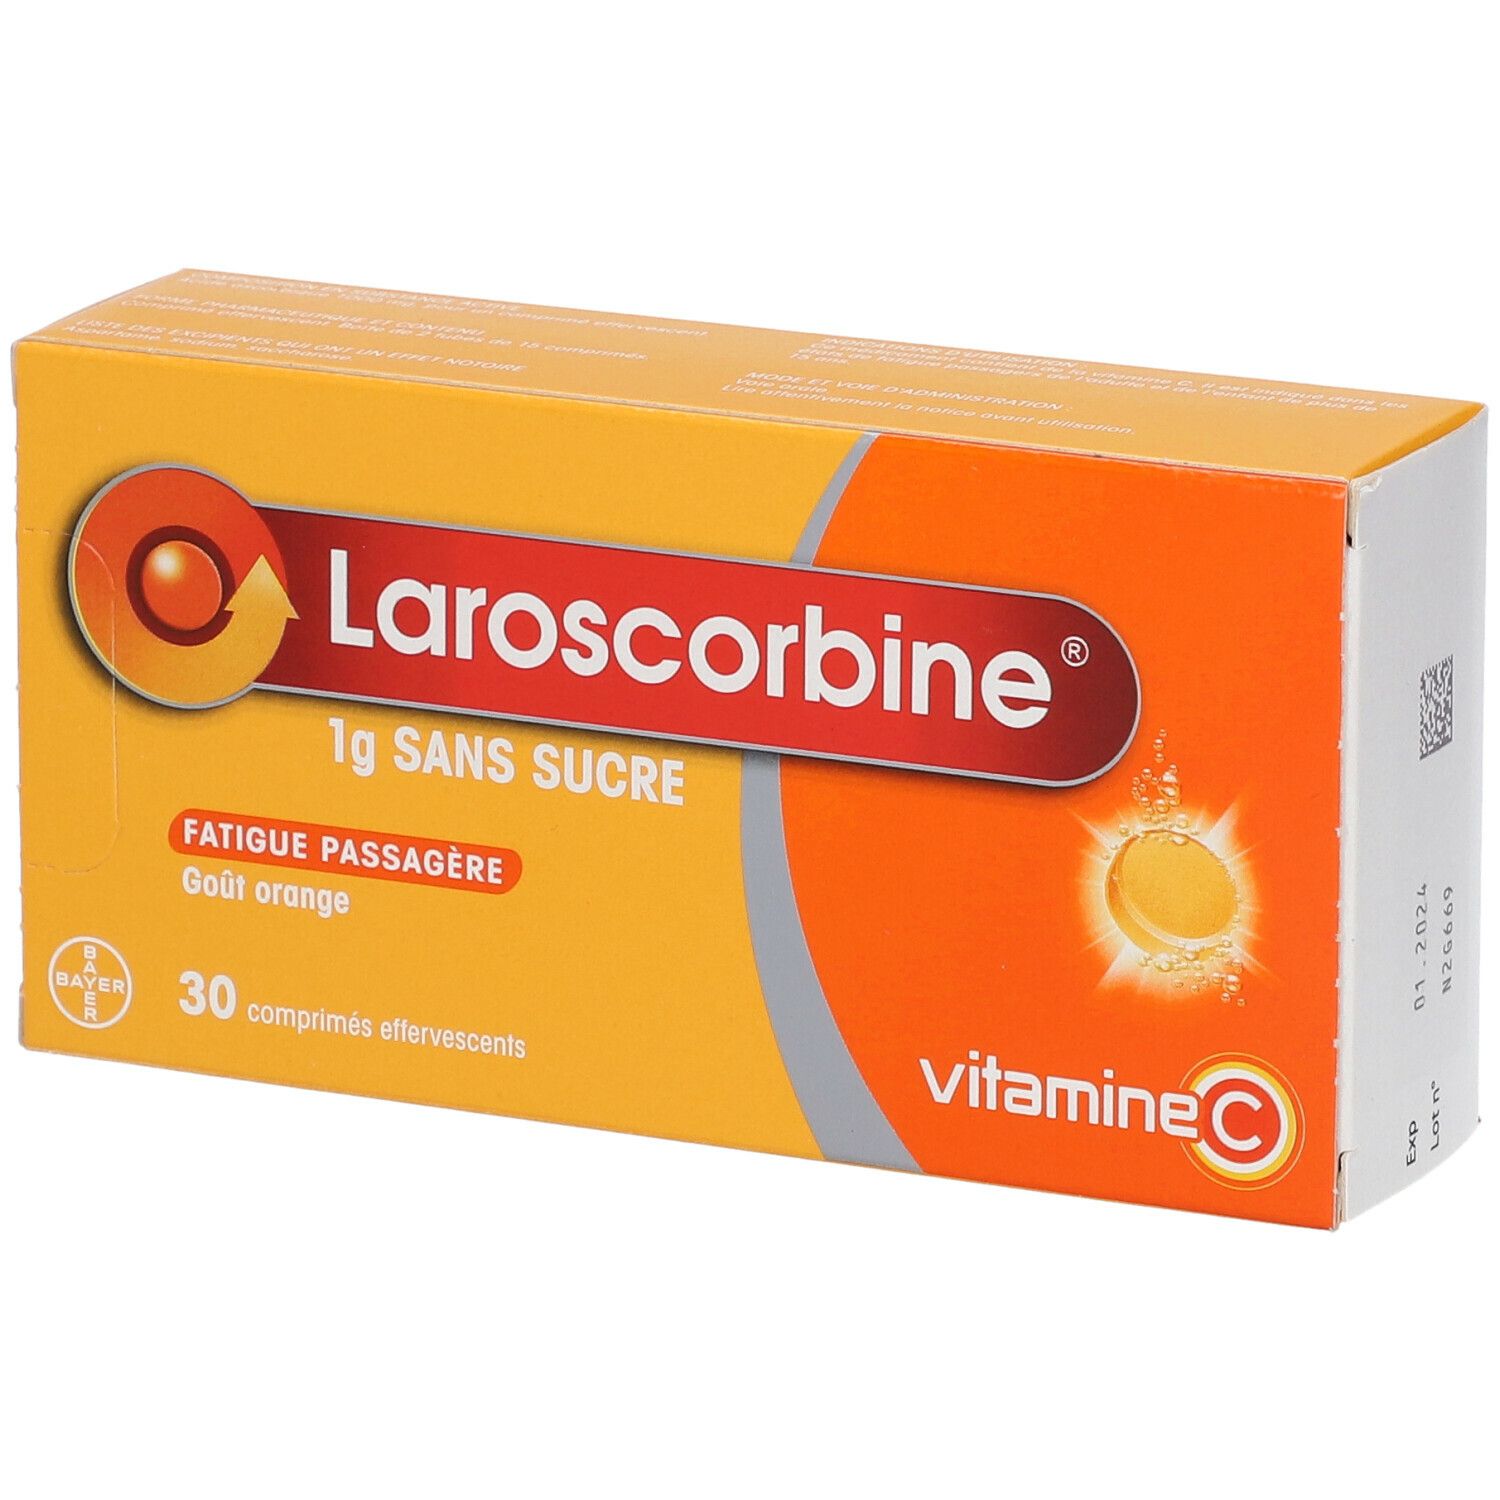 Laroscorbine® s/s 1 g